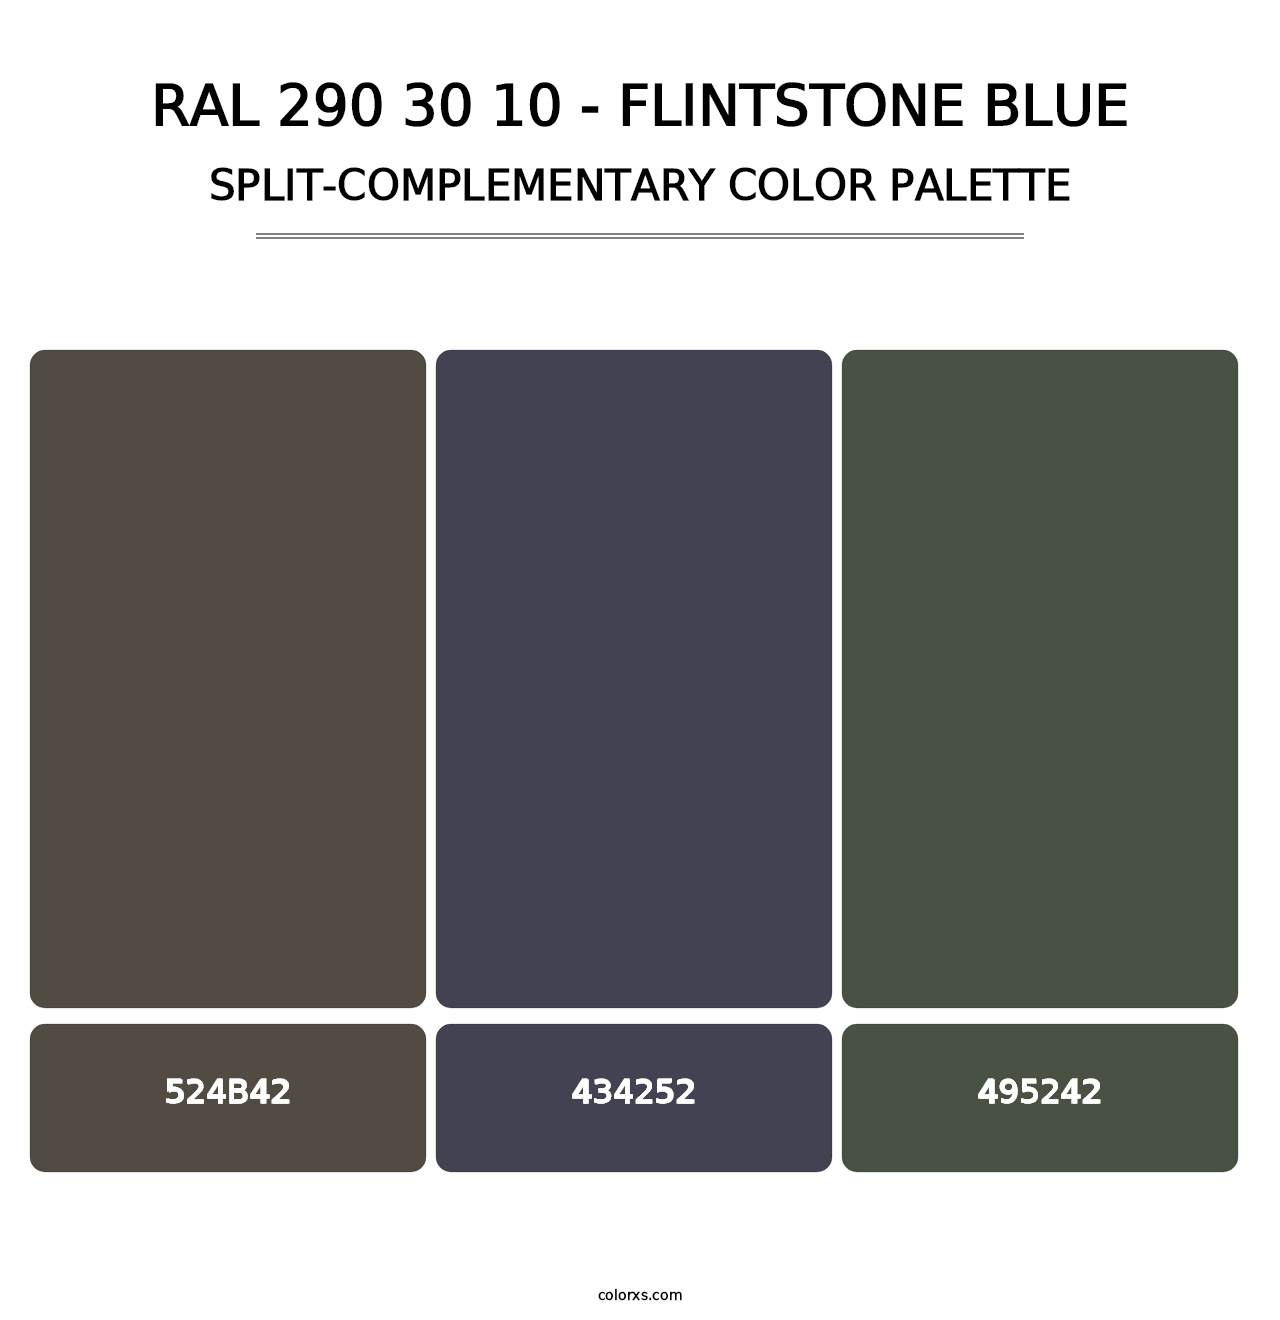 RAL 290 30 10 - Flintstone Blue - Split-Complementary Color Palette